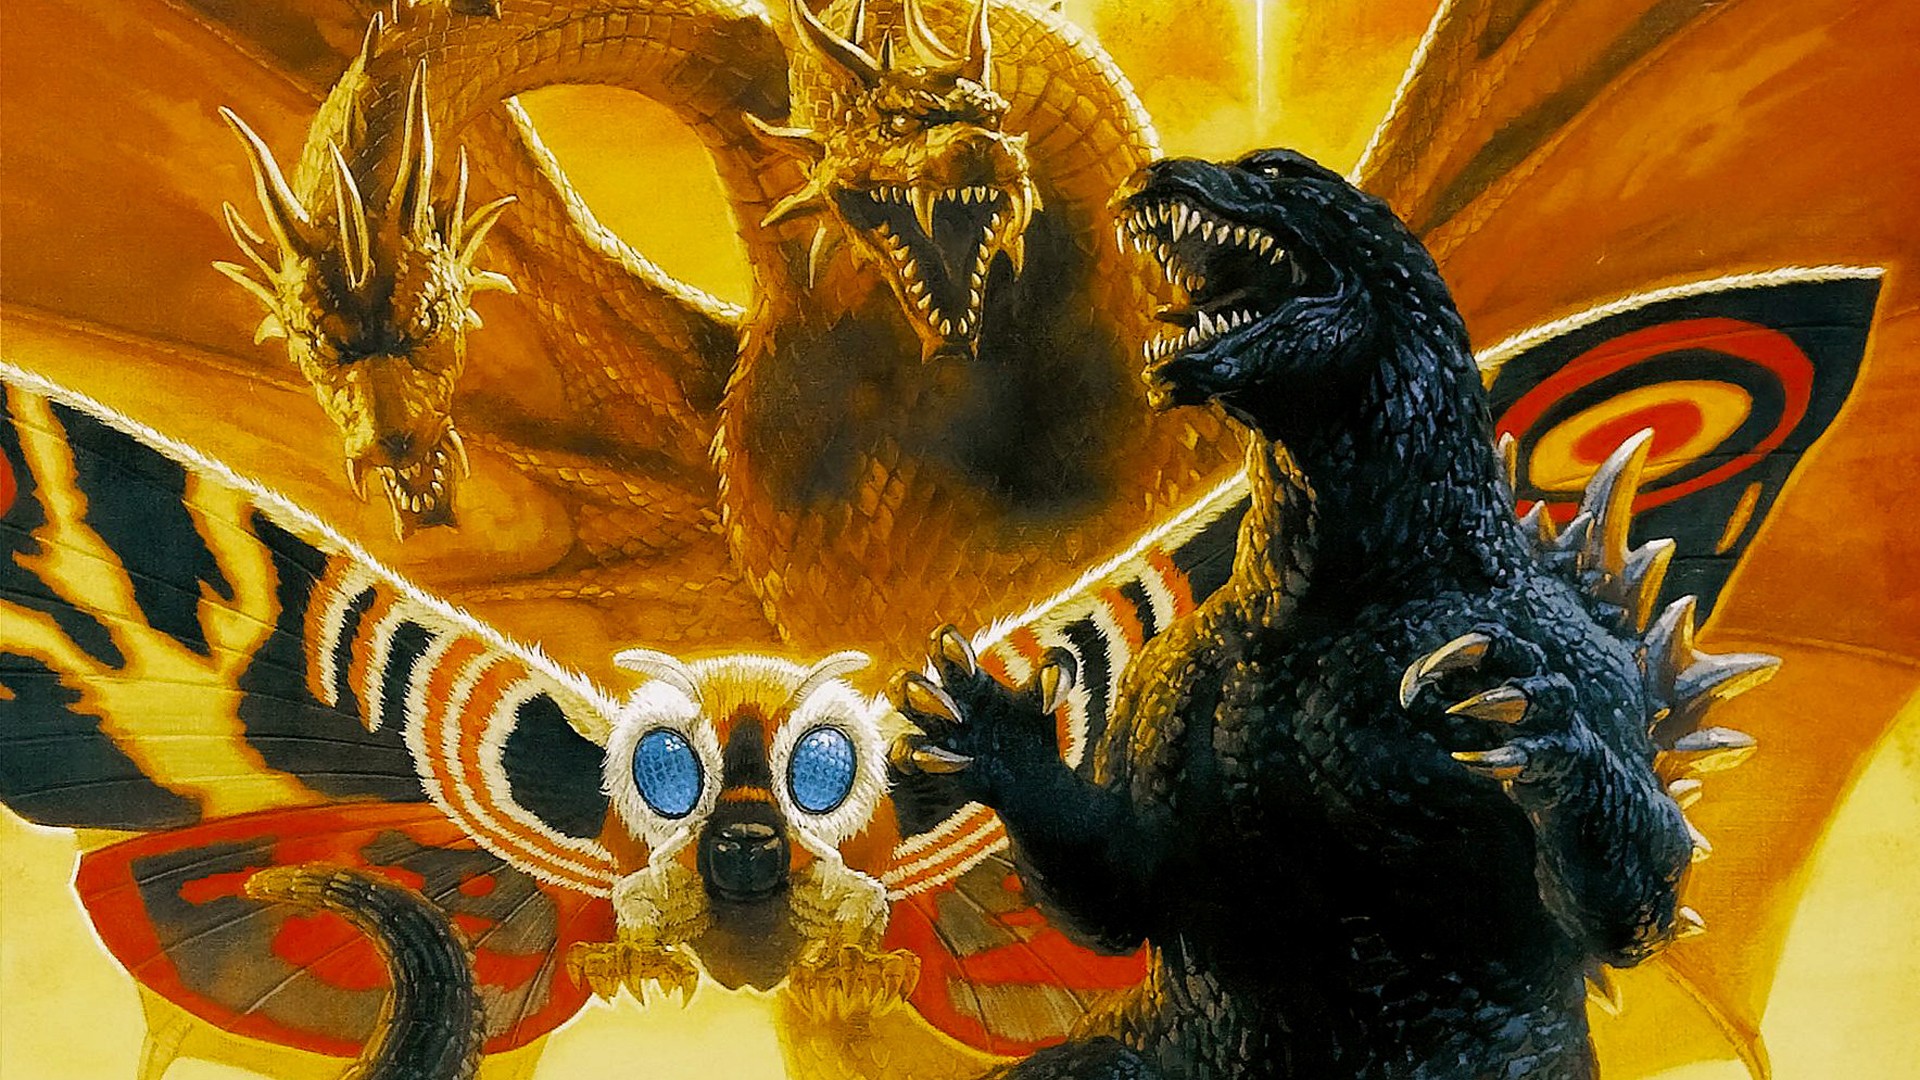 Godzilla Mothra And King Ghidorah Wallpaper HD Cool Image Amazing